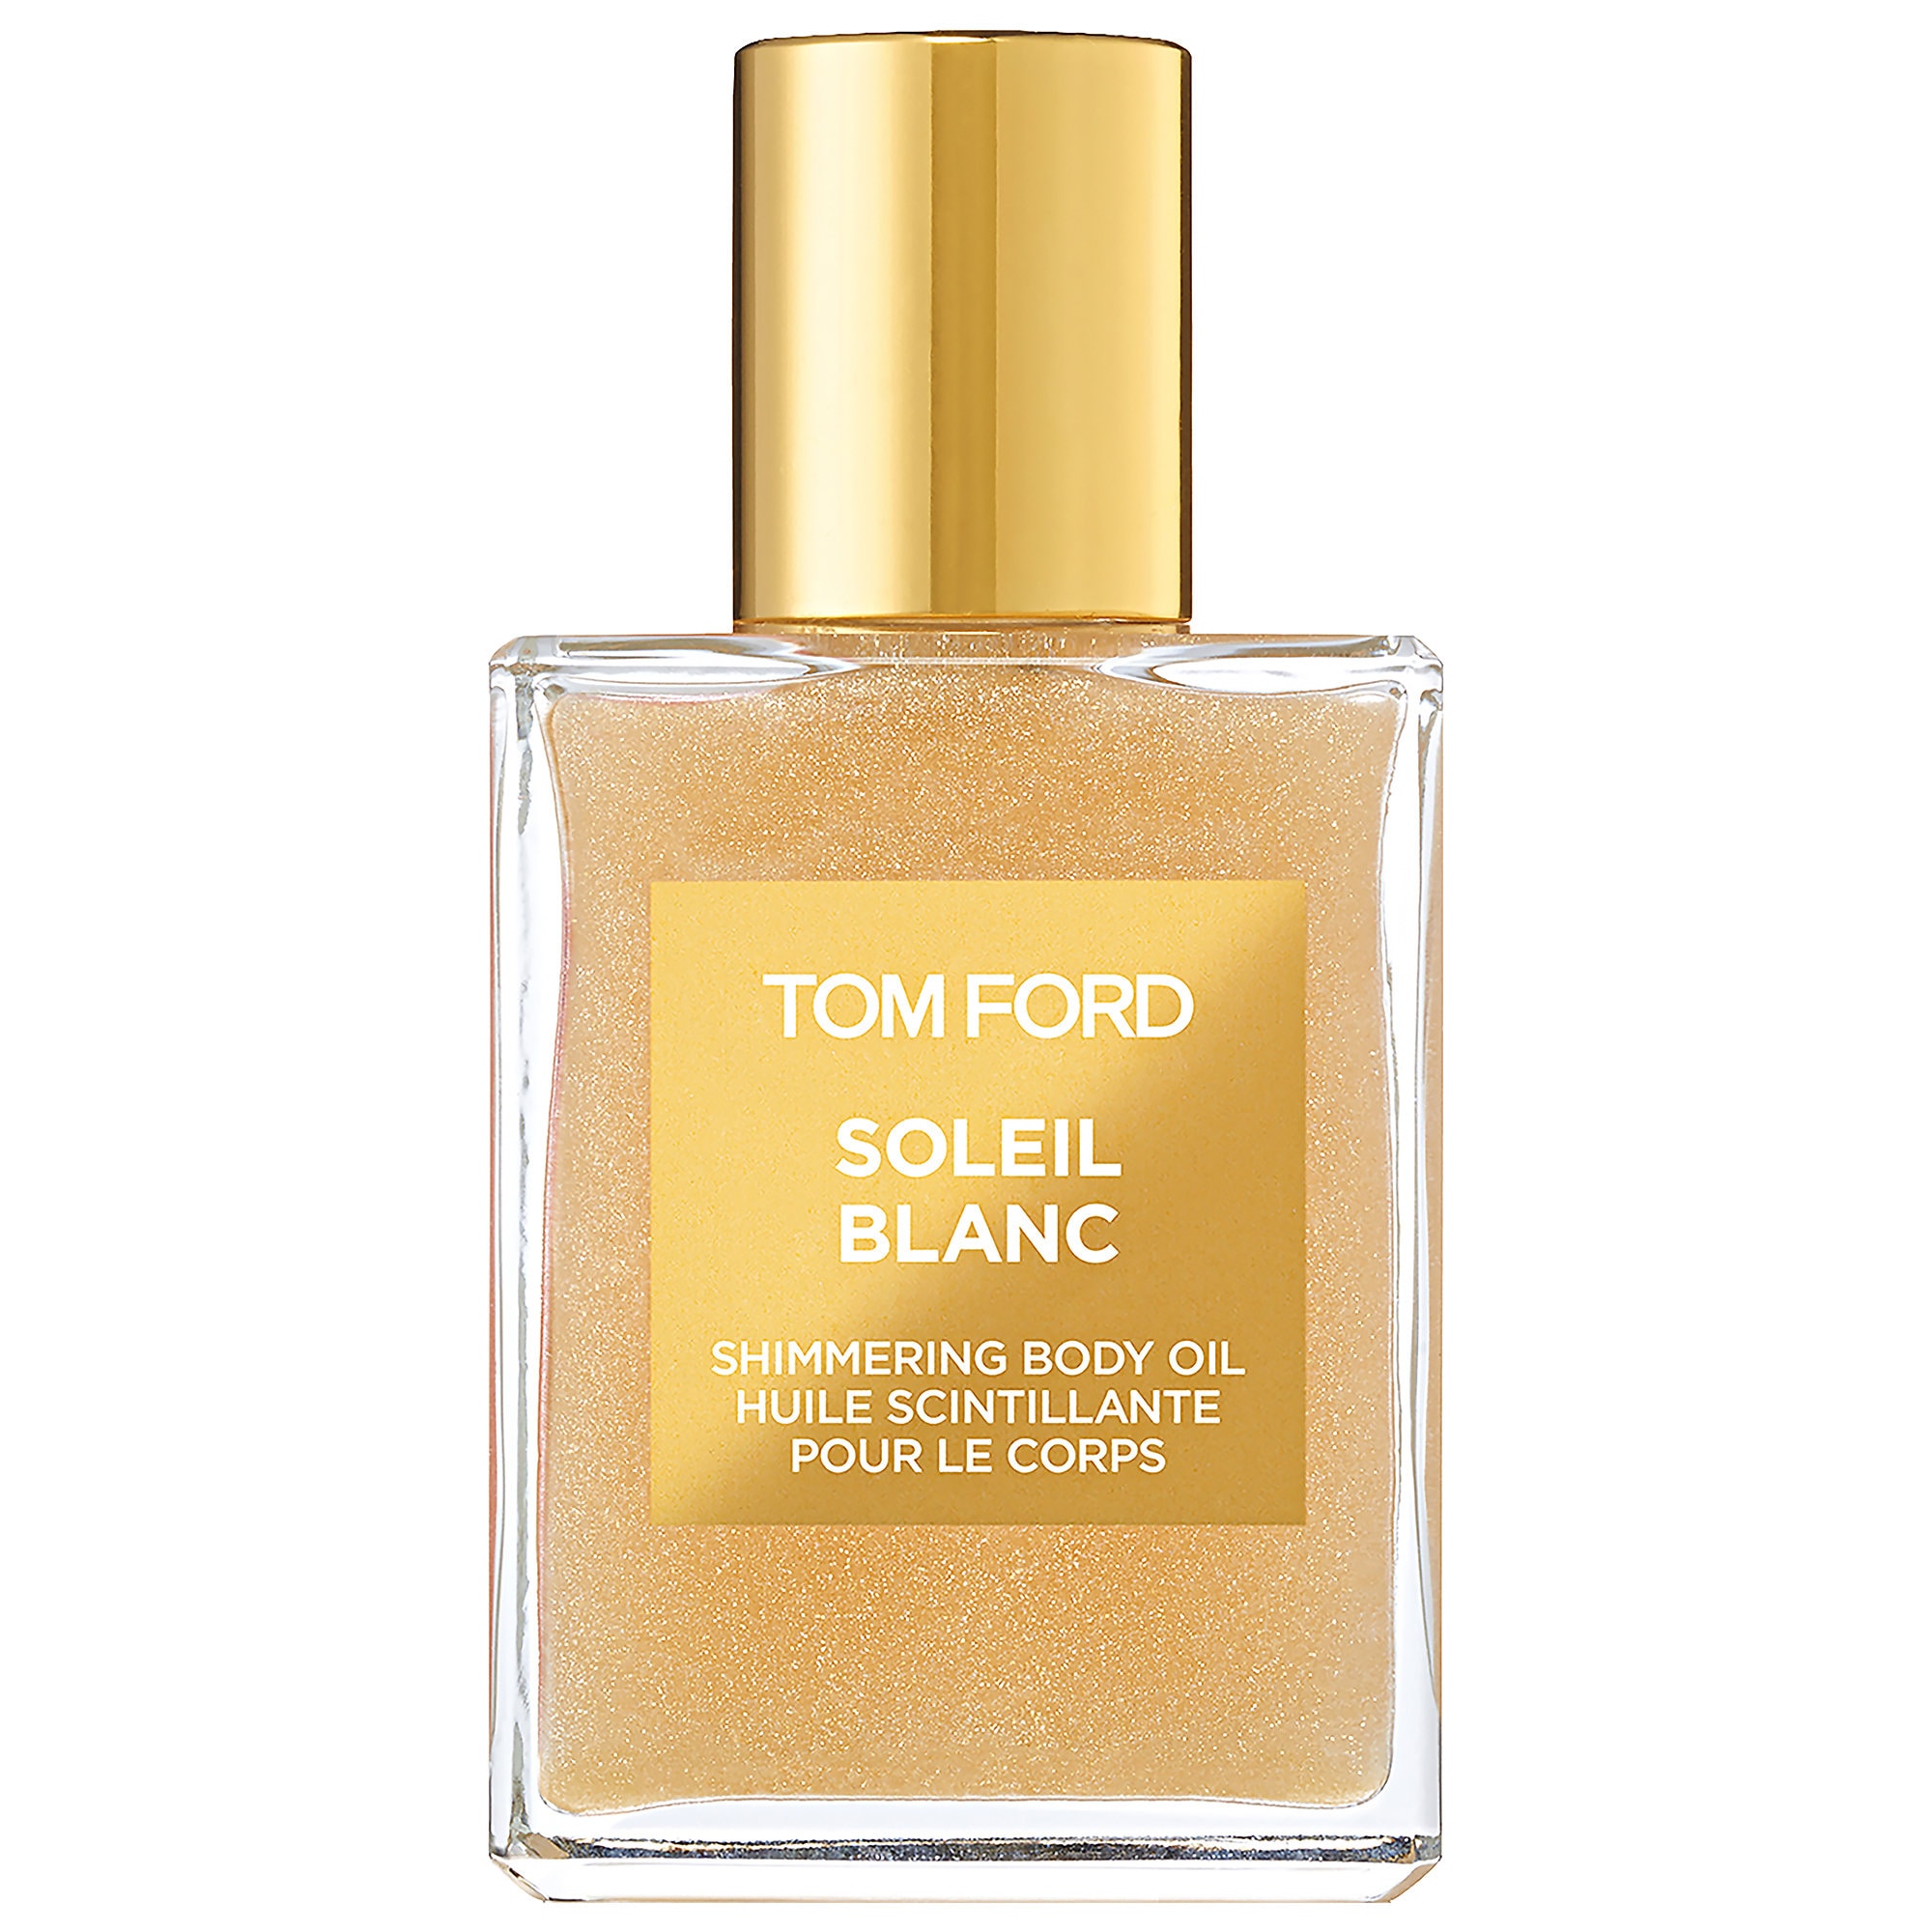 Tom Ford Mini Soleil Blanc Shimmering Body Oil, sephora holiday savings event